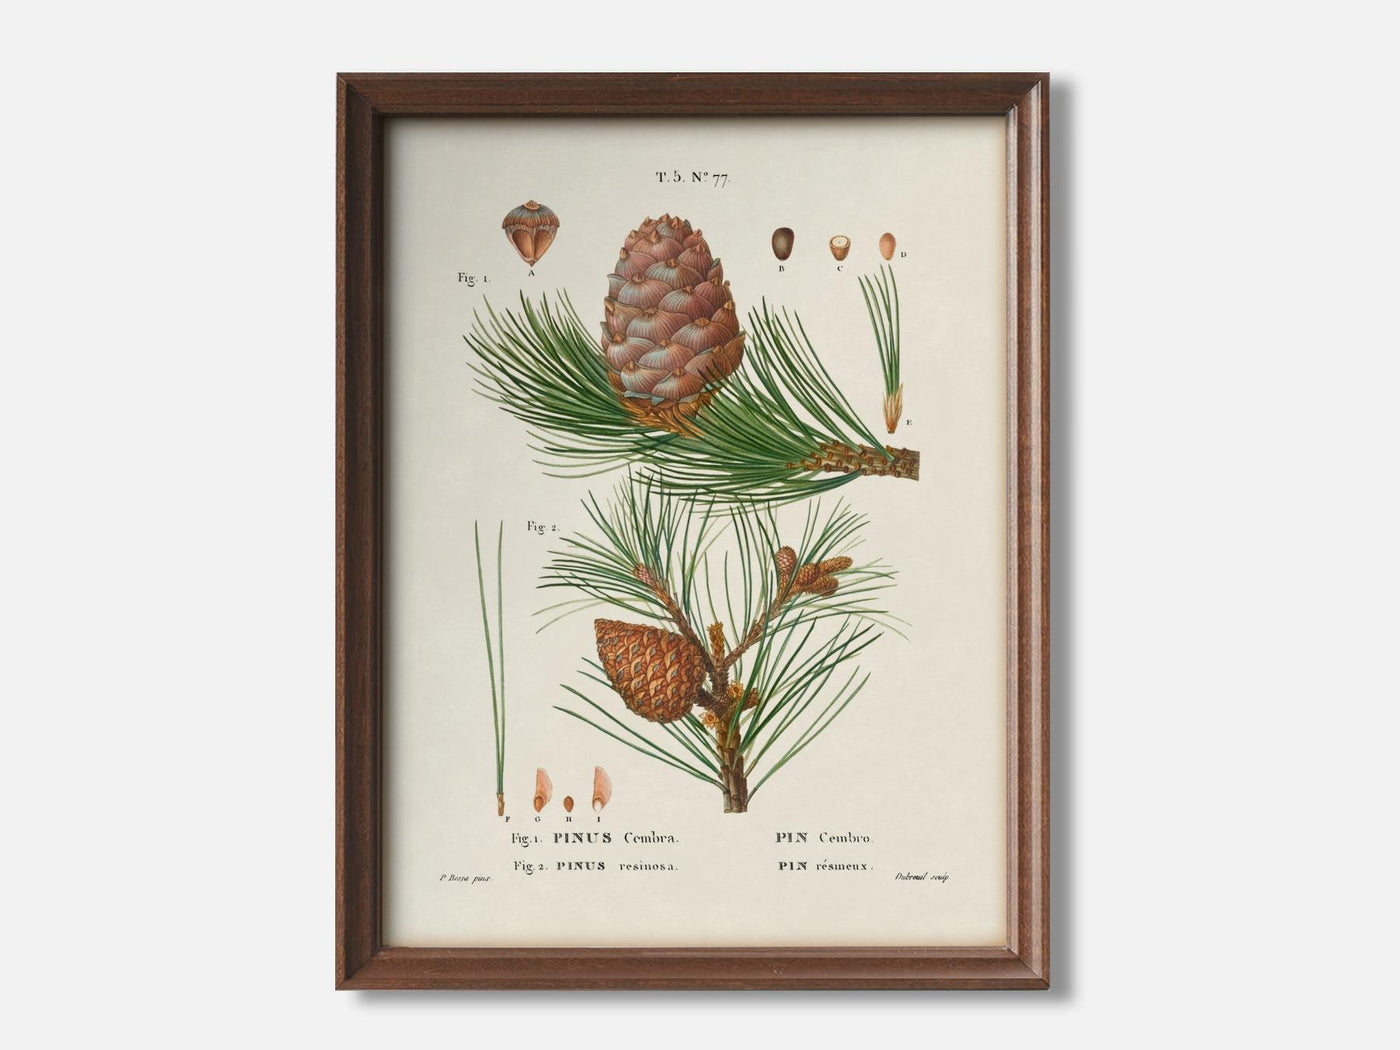 Swiss Pine - Pinus cembra & Red pine - Pinus resinosafrom 1 Walnut - Light Parchment mockup